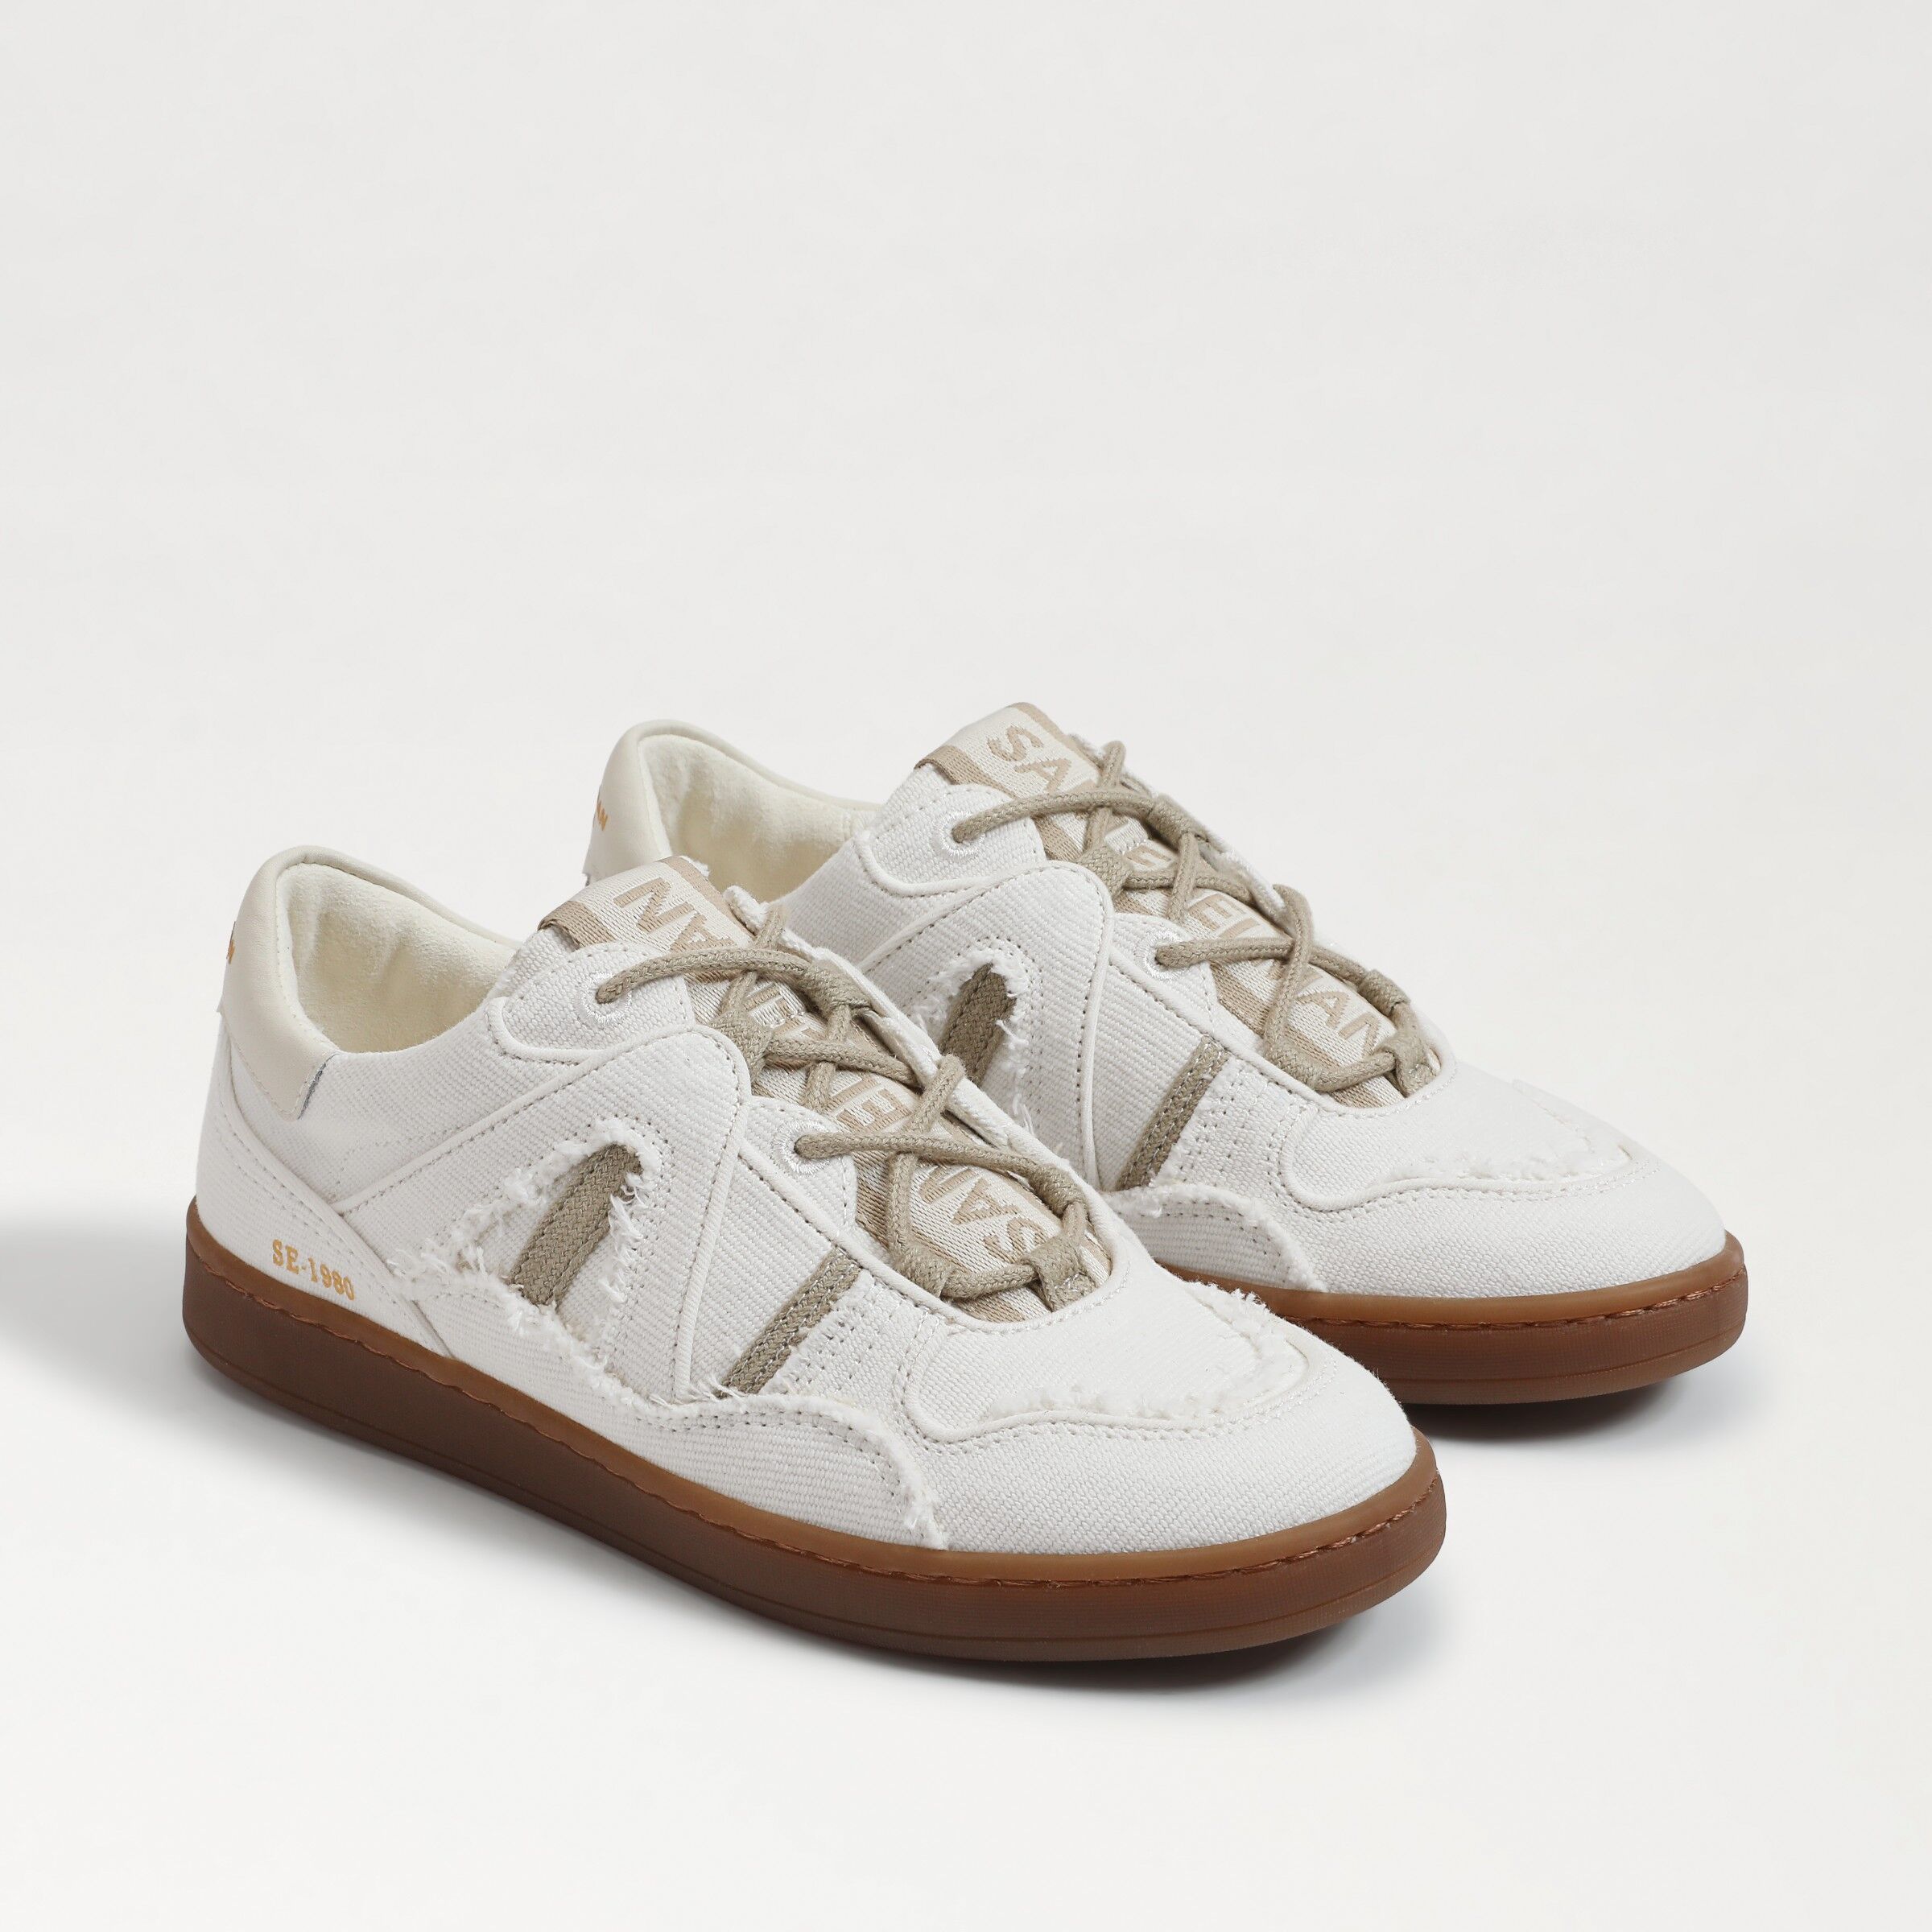 Sam Edelman Jayne Lace Up Sneaker White/Stone Grey Fabric 10.0